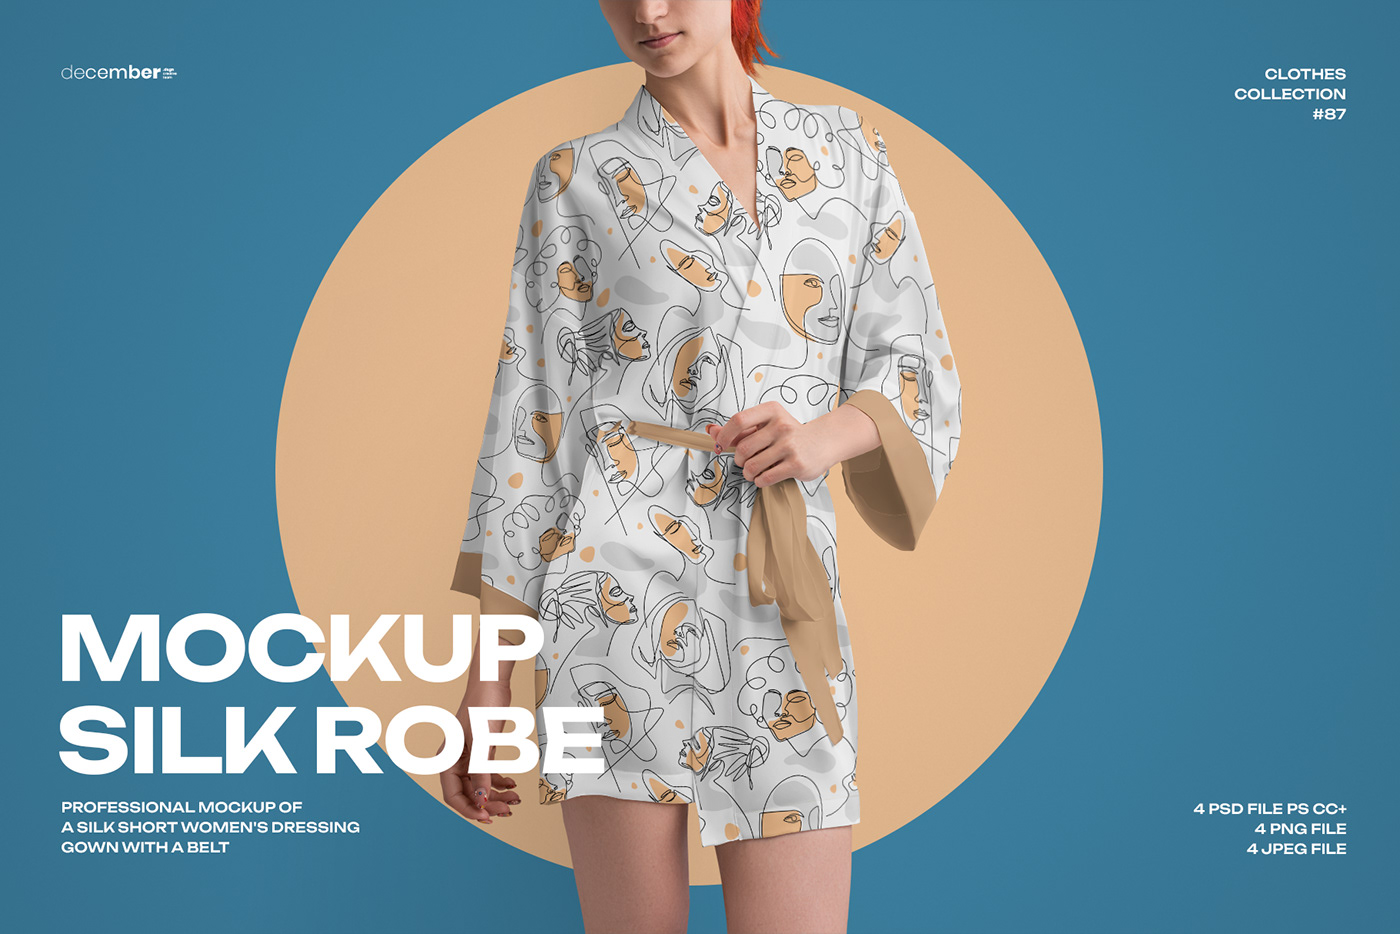 Mockup SILK apparel cloth dressing underwear December gown robe silk robe